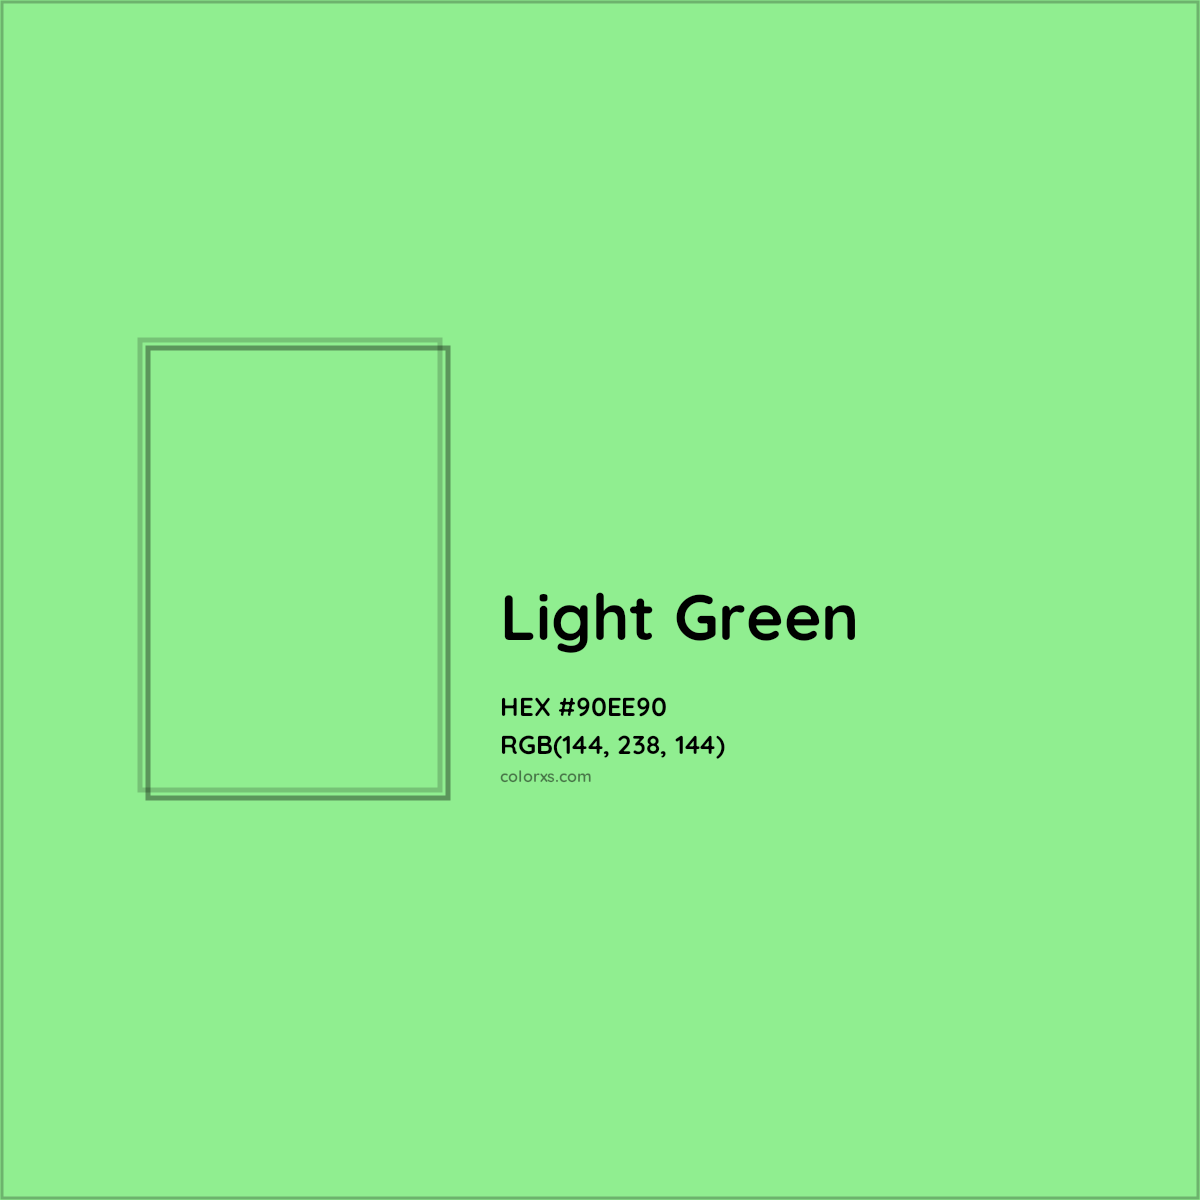 HEX #90EE90 Light Green Color - Color Code